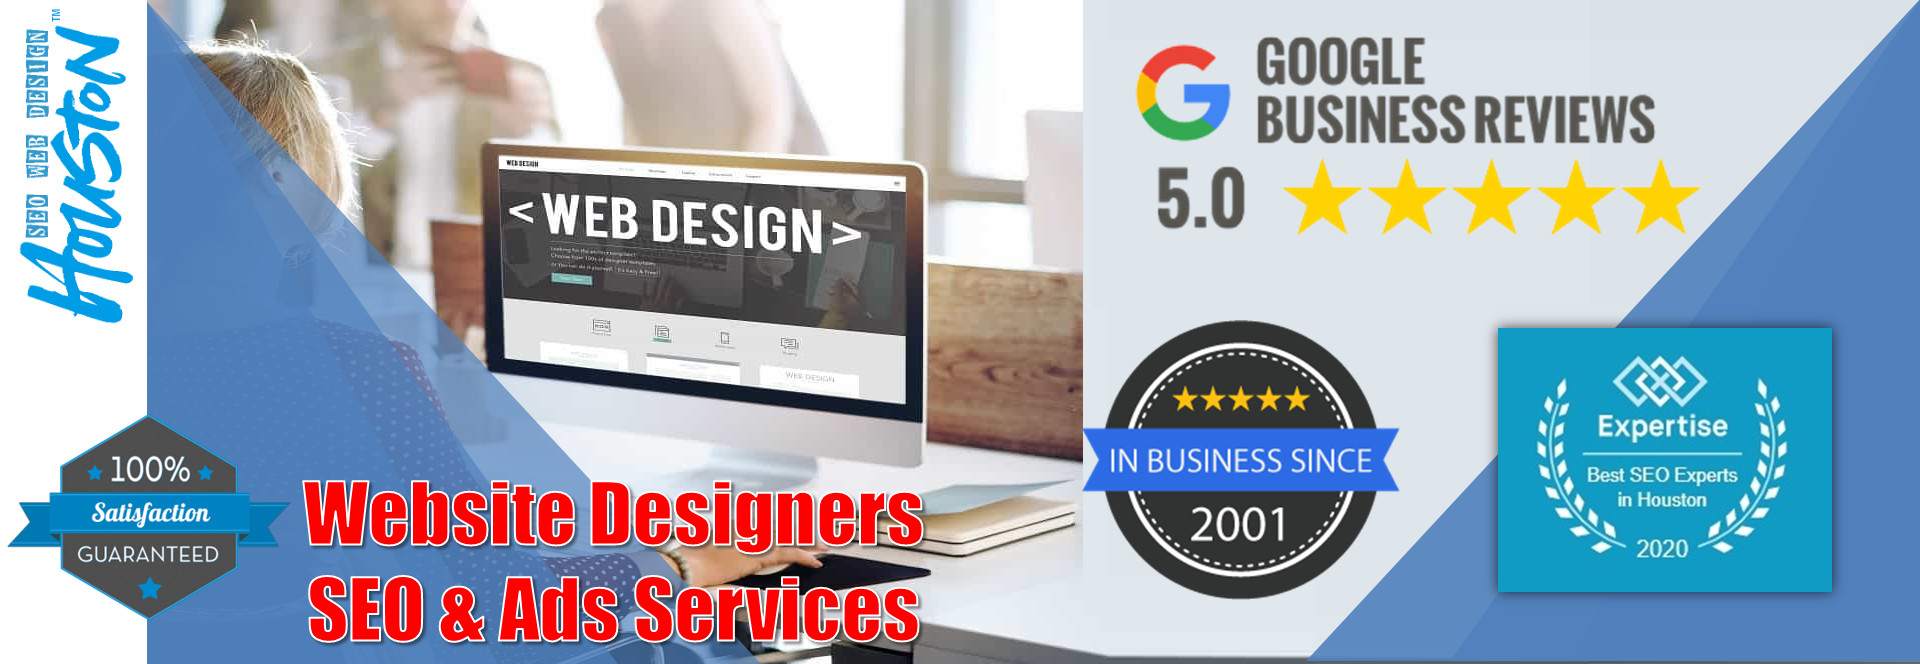 SEO Web Design Houston - Google Reviews - 5 Star Rating Since 2001